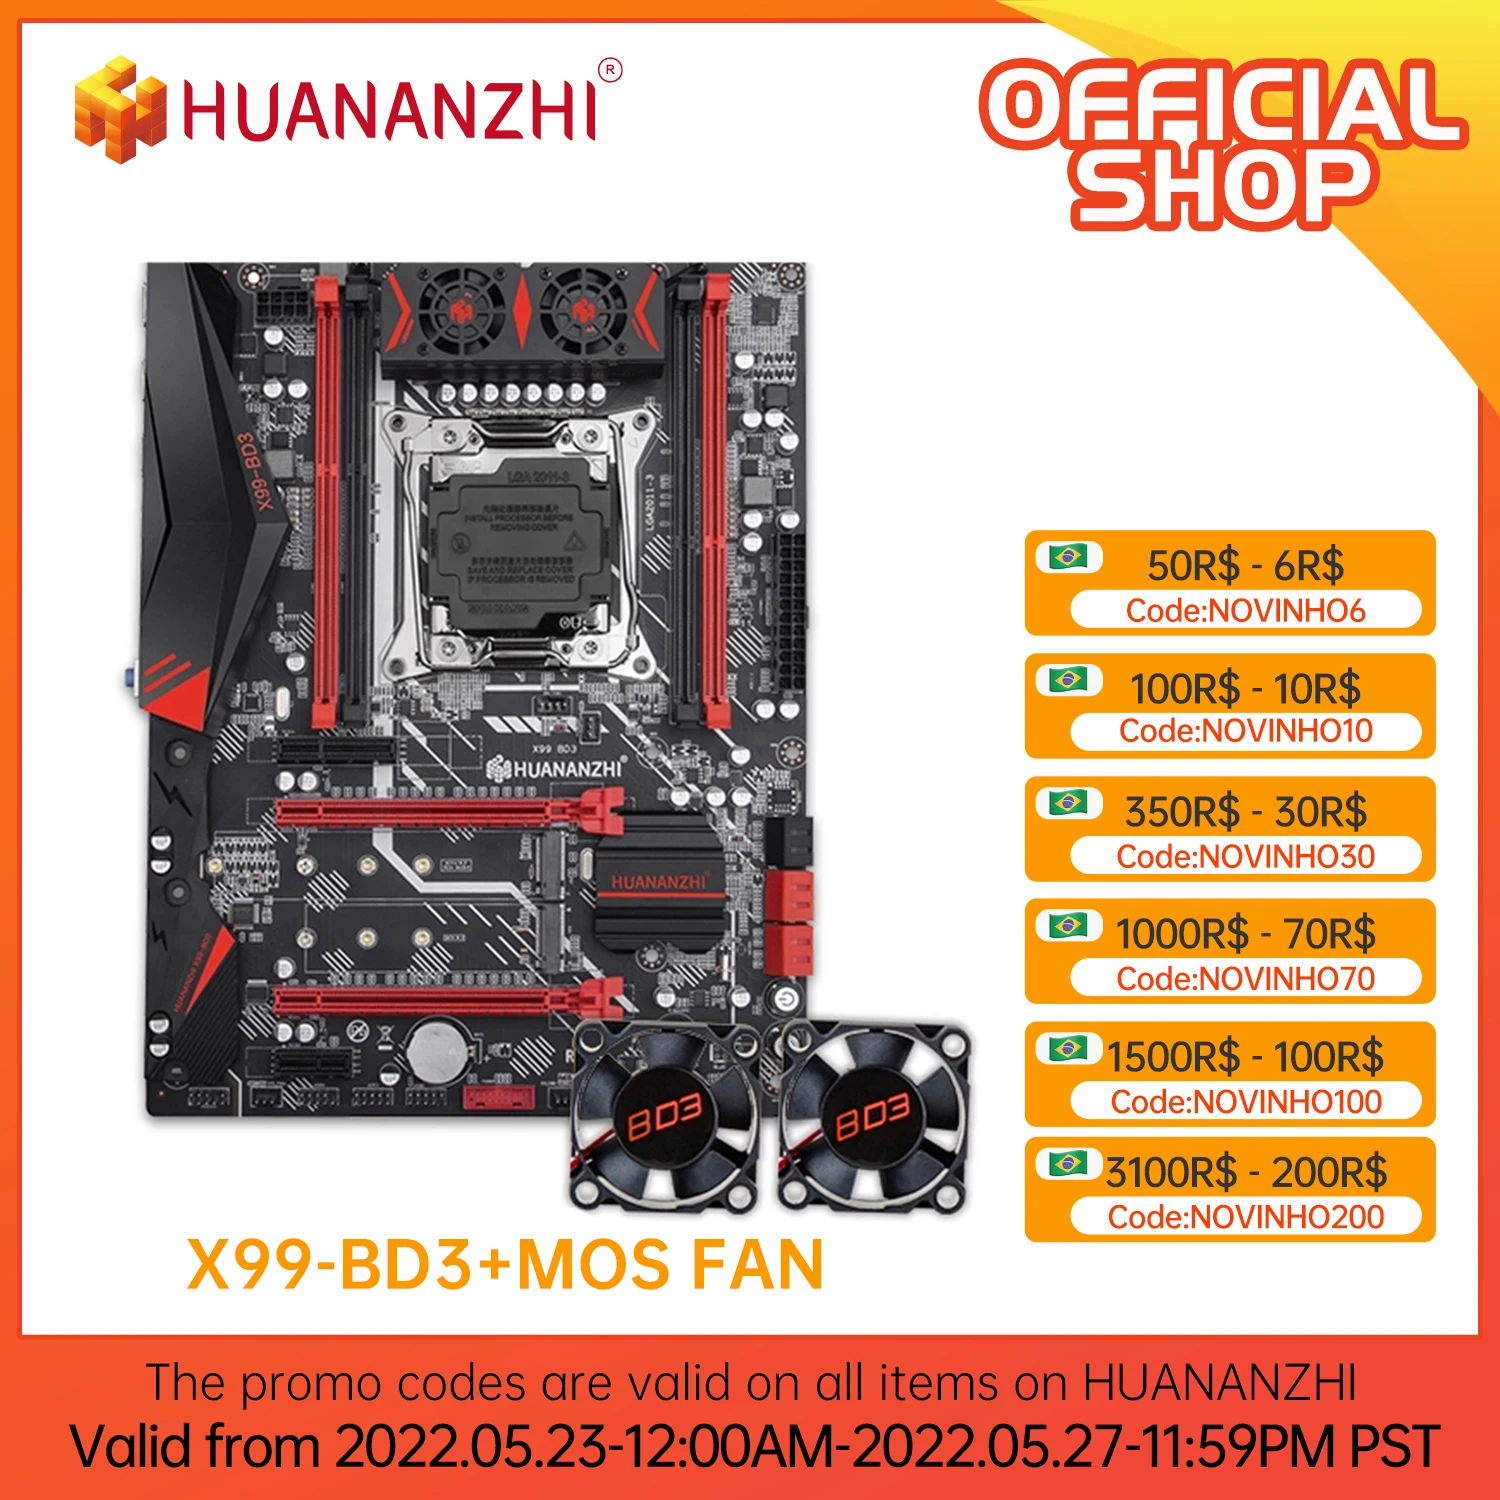 Huananzhi X99 BD3 V1.1 X99 Moederbord Intel X99 Lga 2011 3 Alle Series DDR3 RECC128GB M.2 Pci E Nvme Ngff atx Server Moederbord|Motherboards| - AliExpress